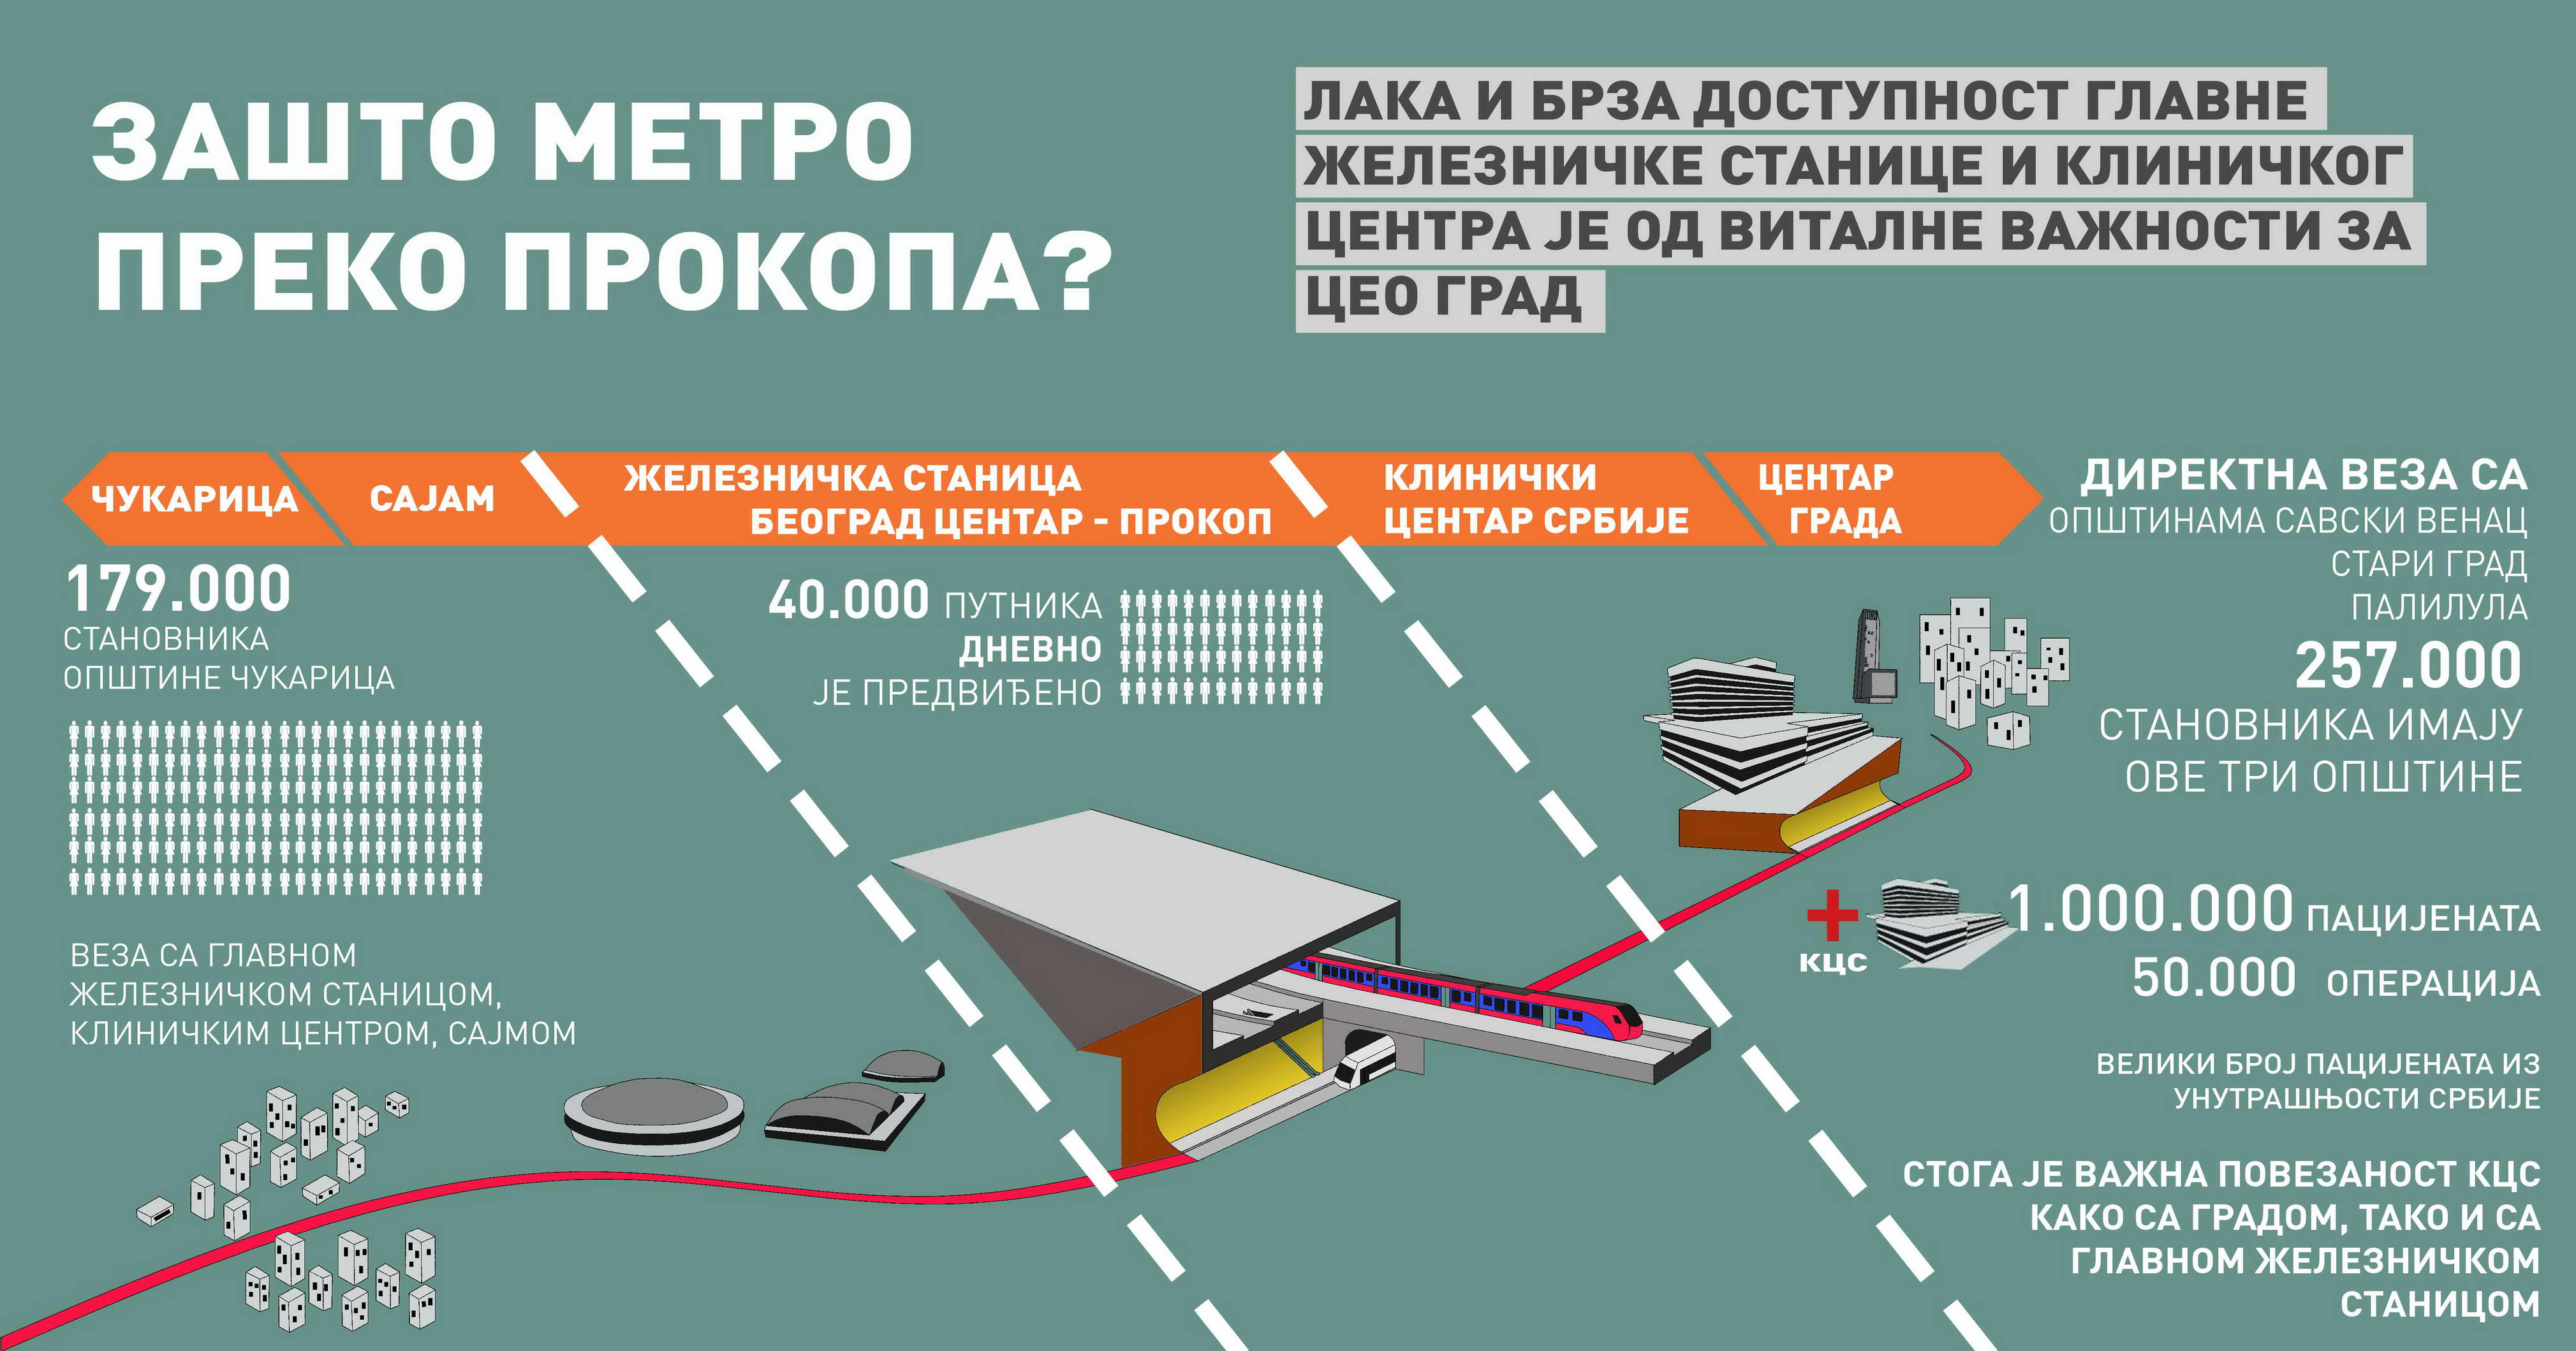 infografika-metro-cirilica-web.jpg